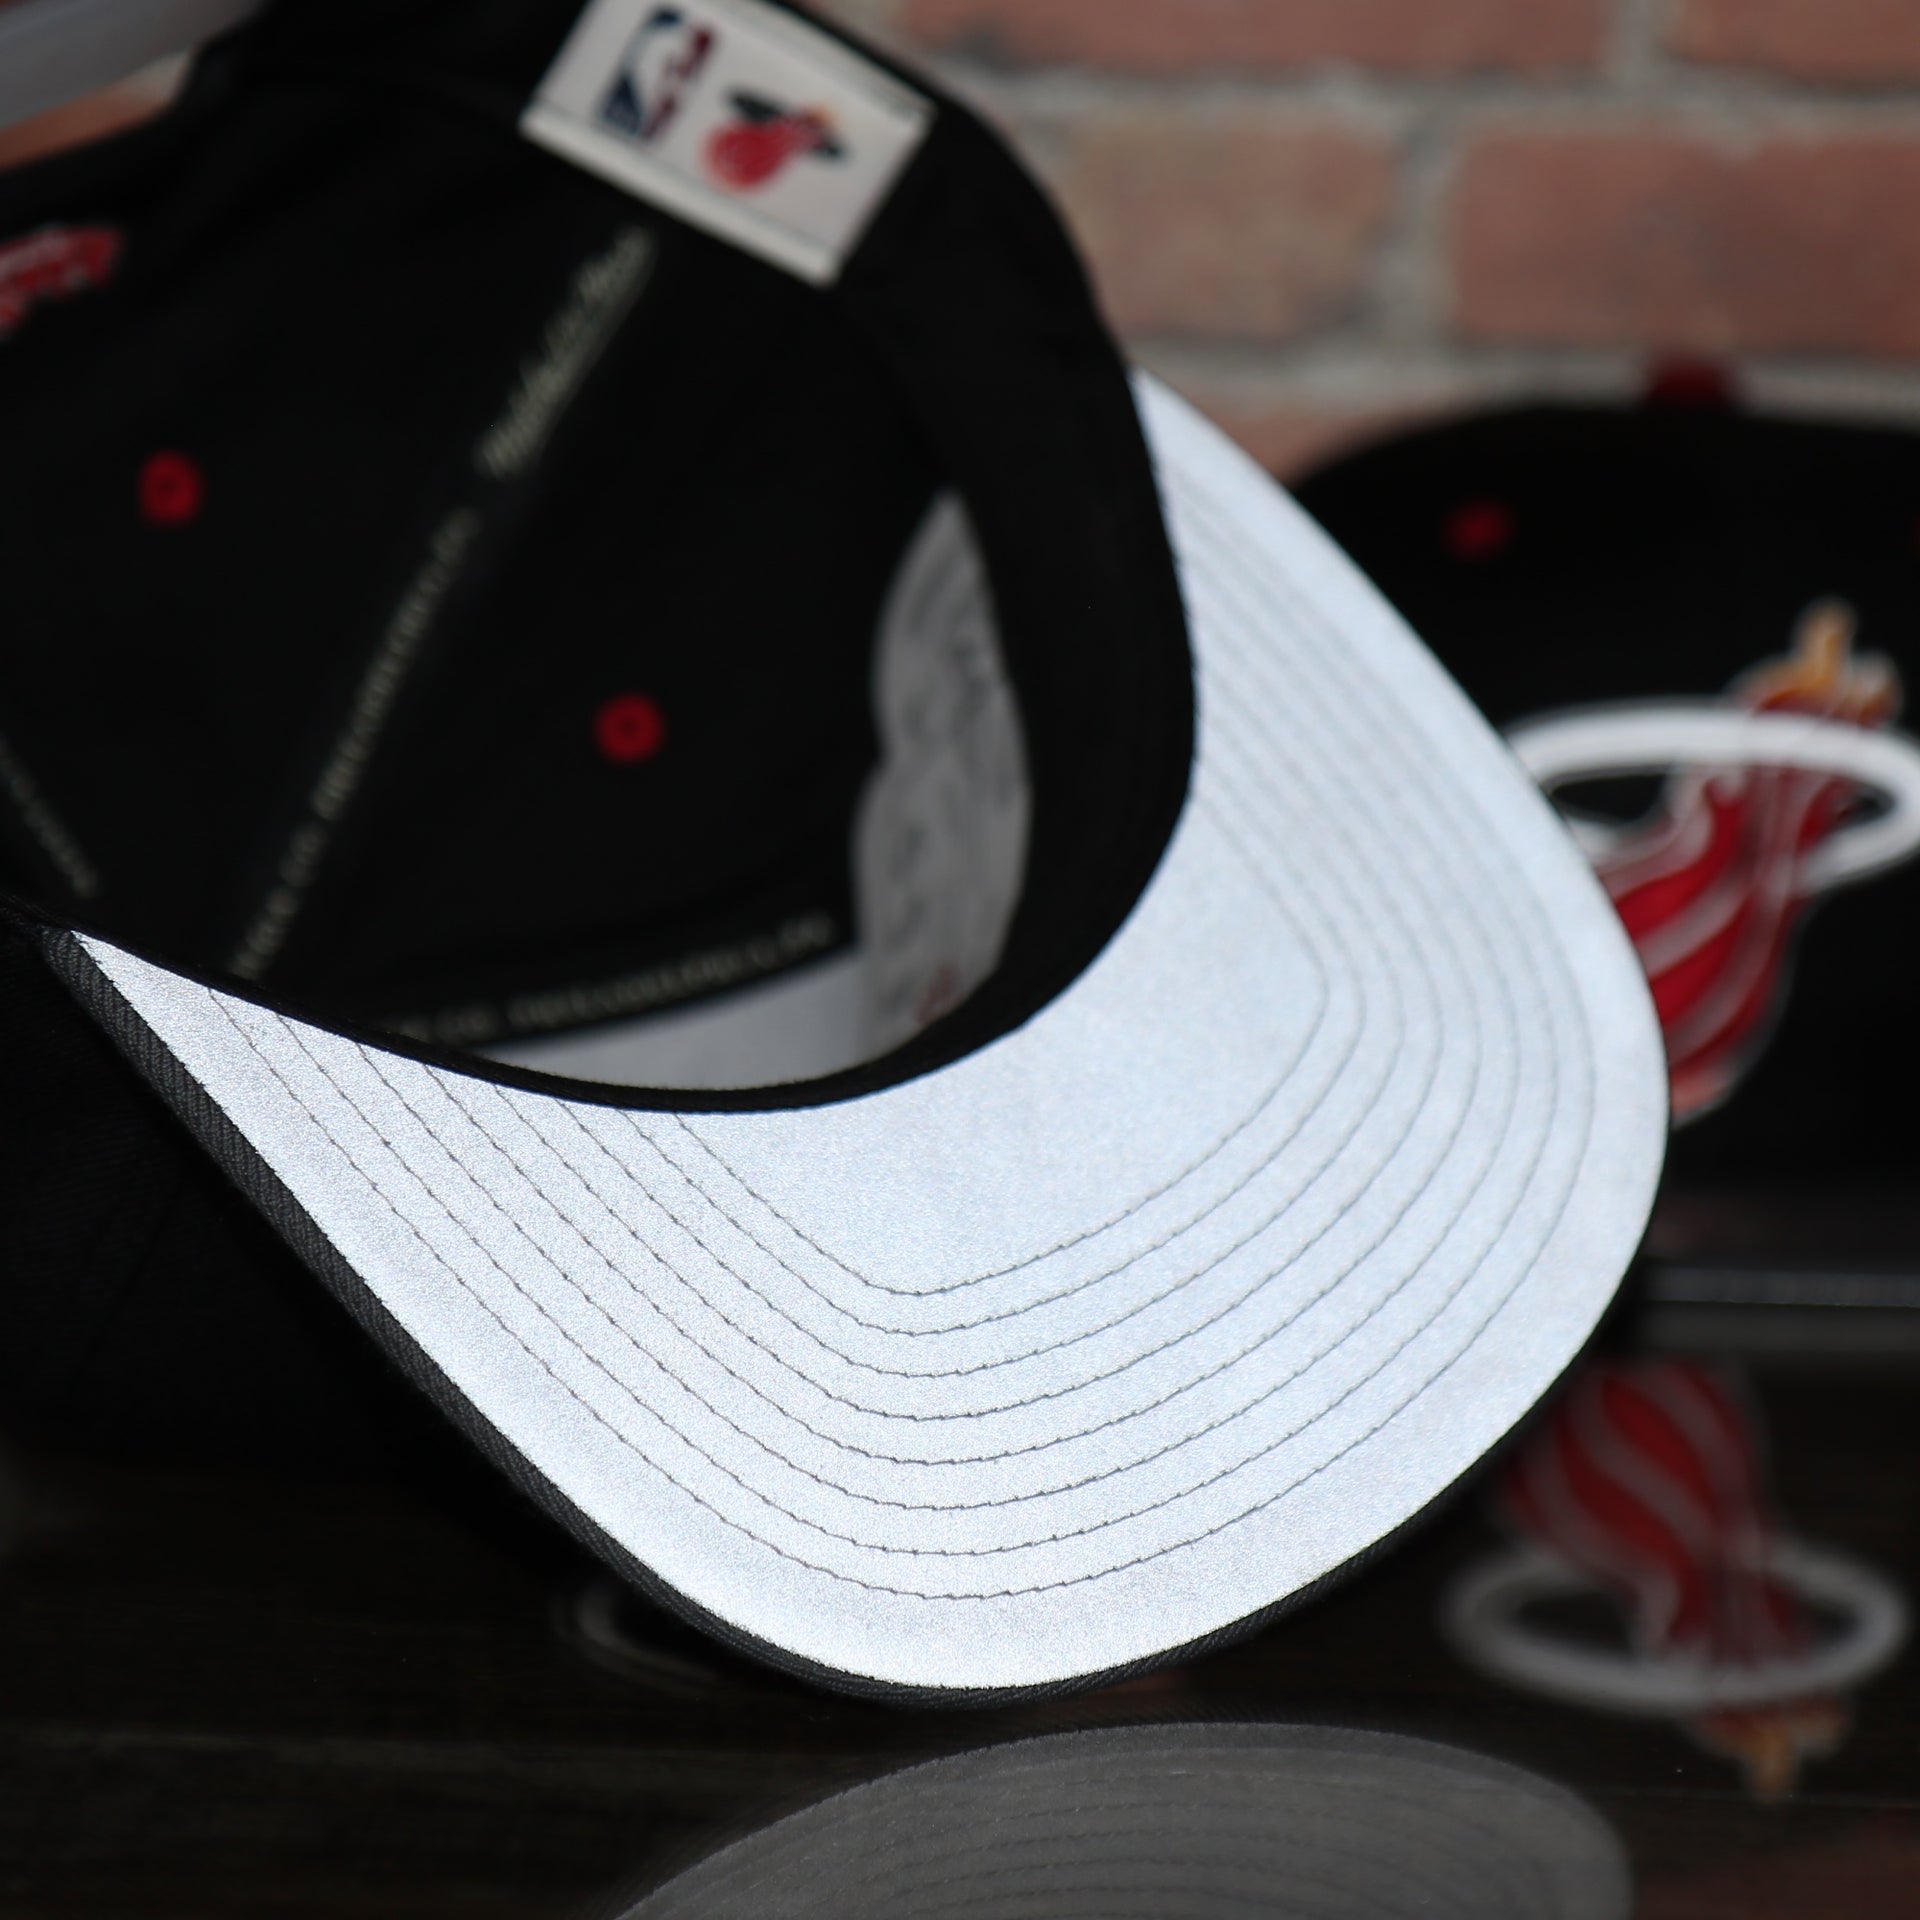 reflective under visor on the Heat reflective 3m snapback | Mitchell Ness Heat Snapback | Miami snapback heat